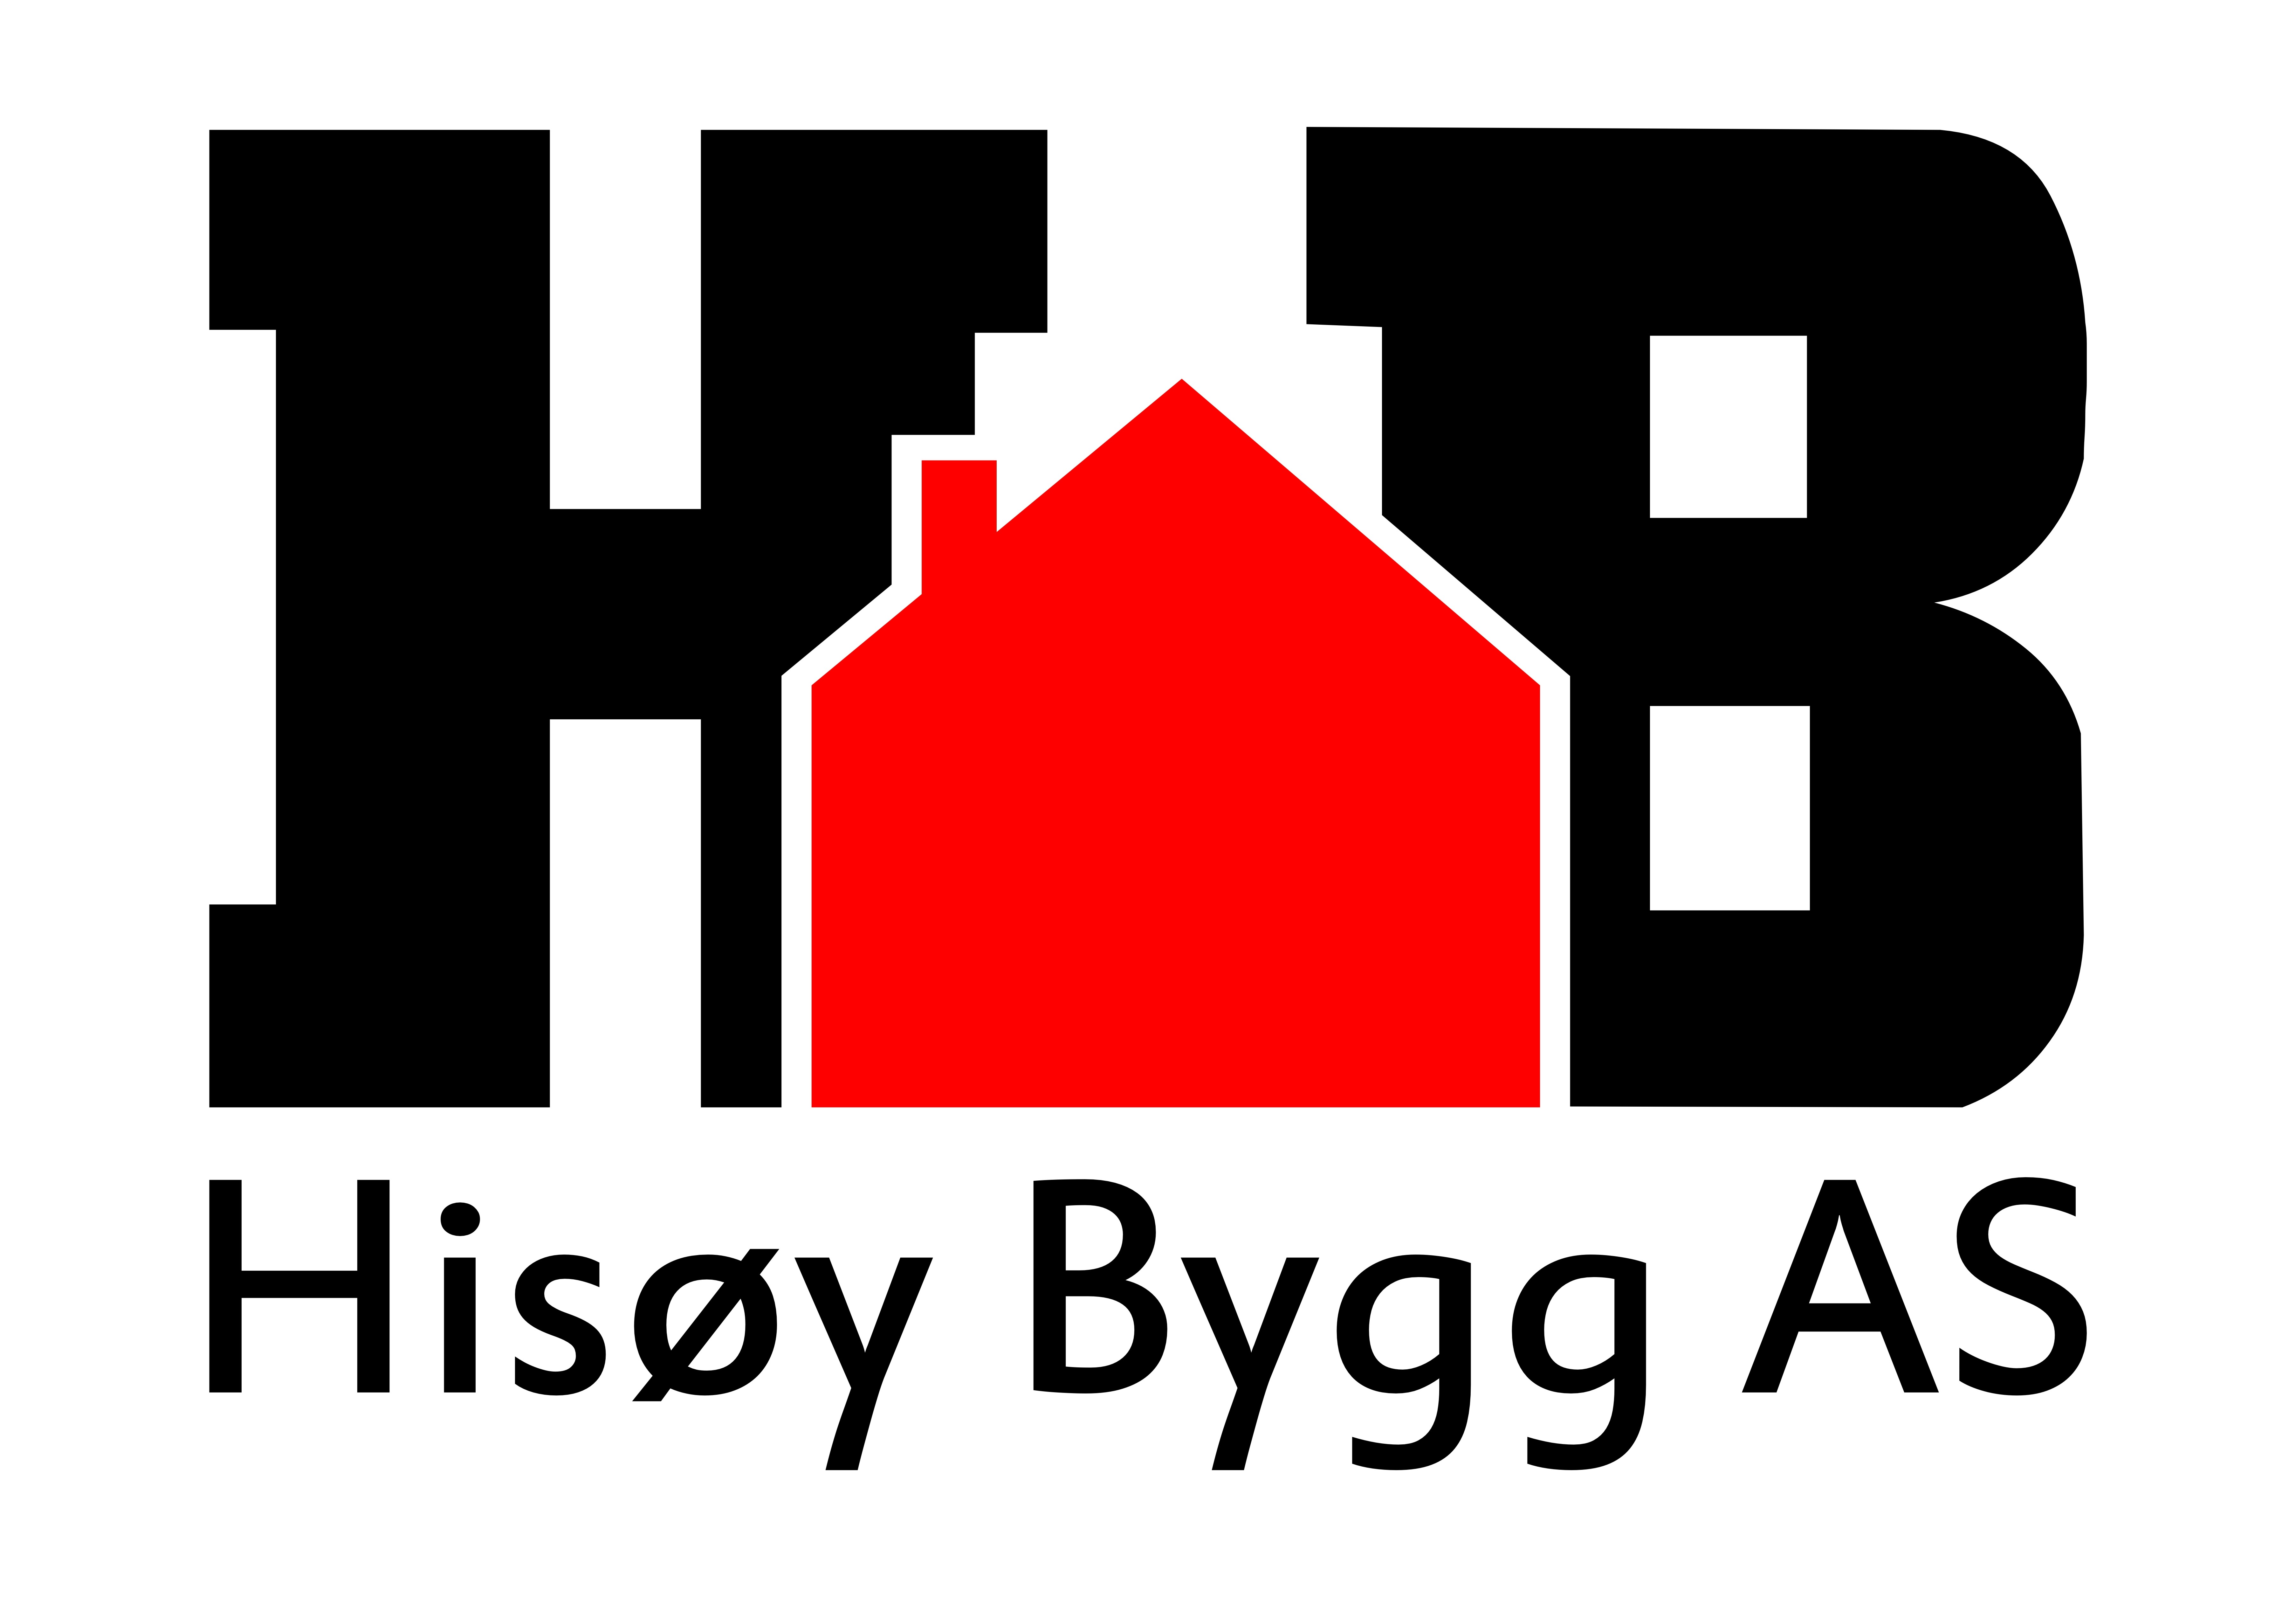 Hisøy Bygg AS